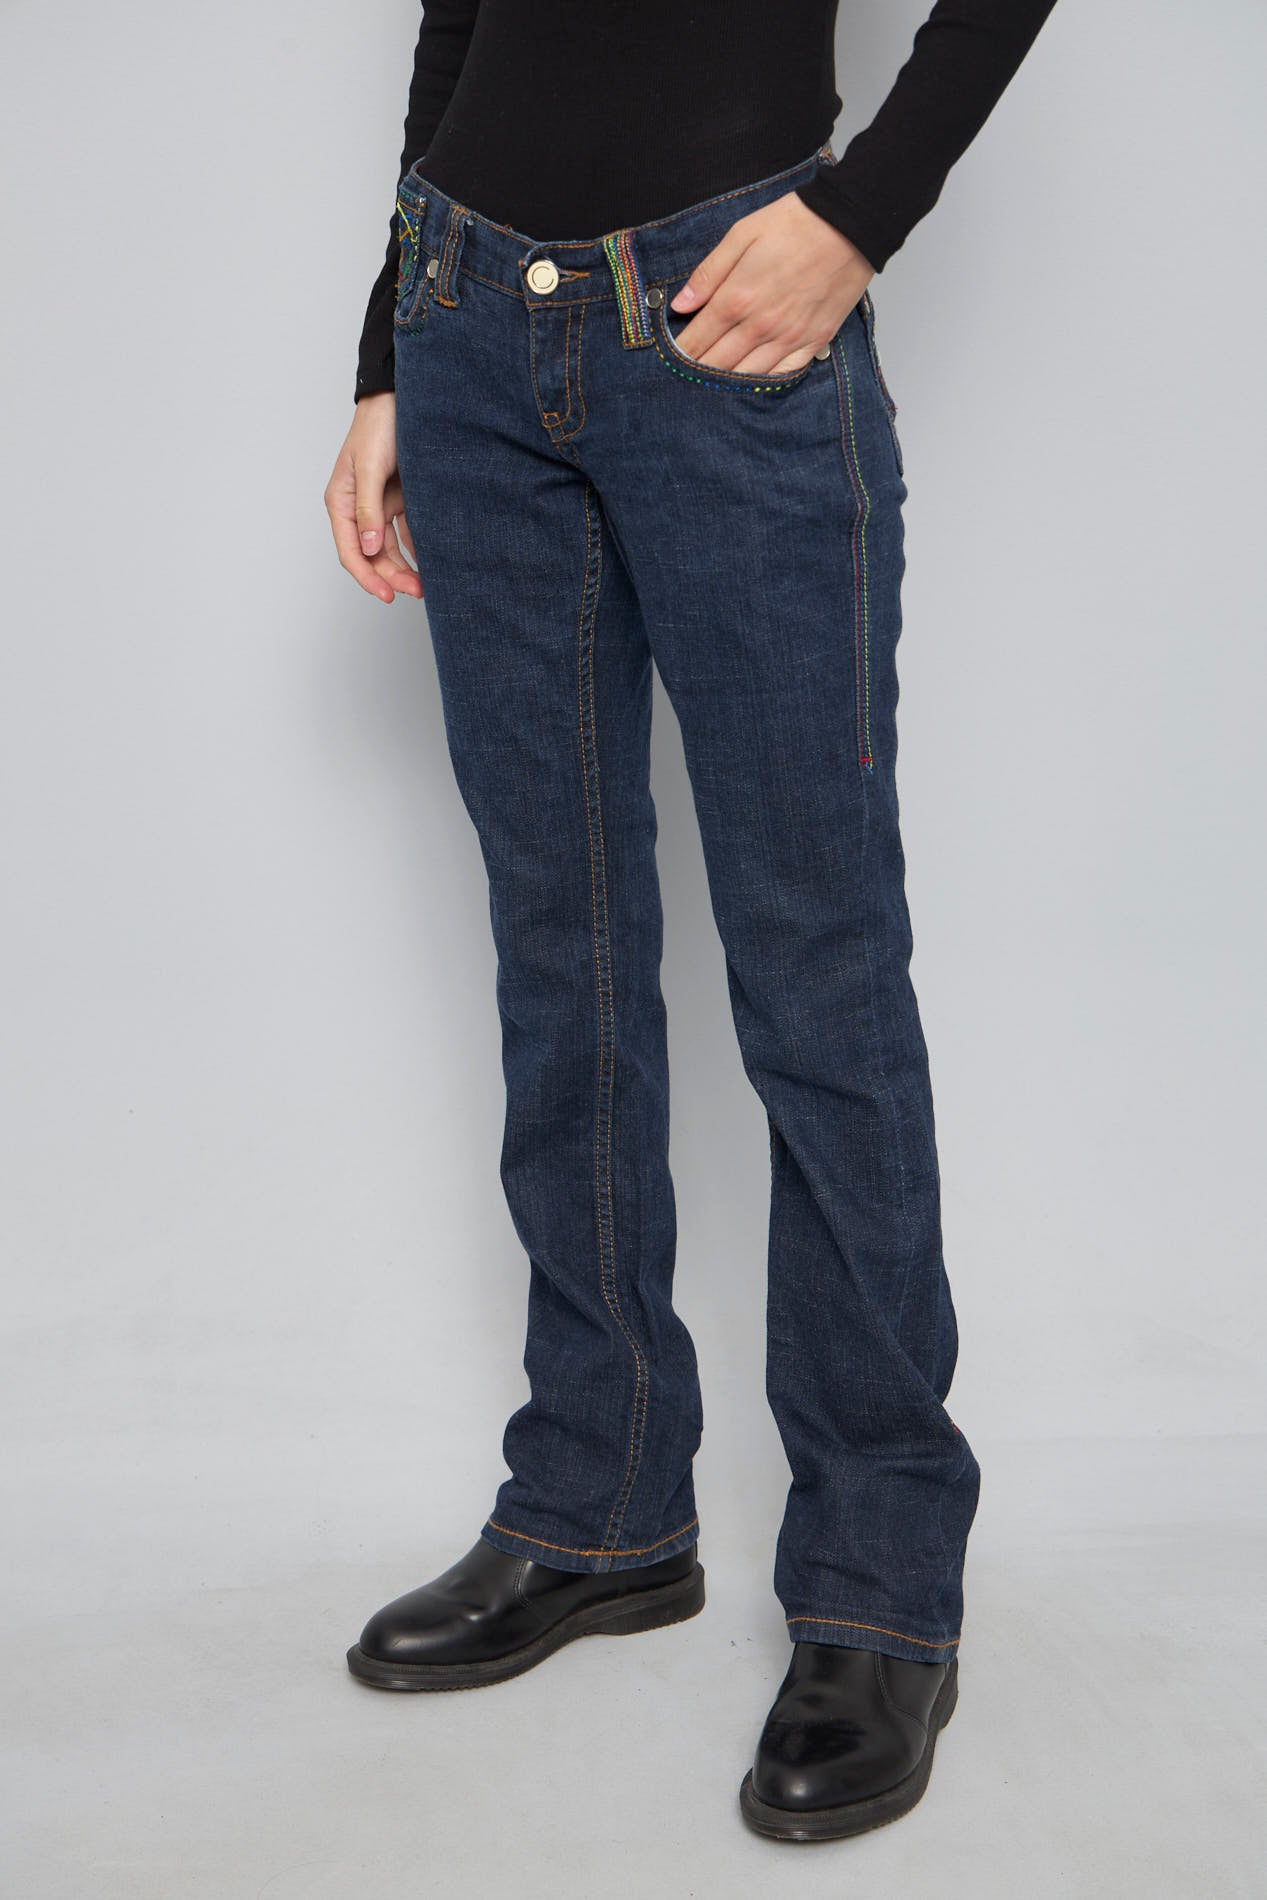 Jeans casual  azul coogi talla 36 829